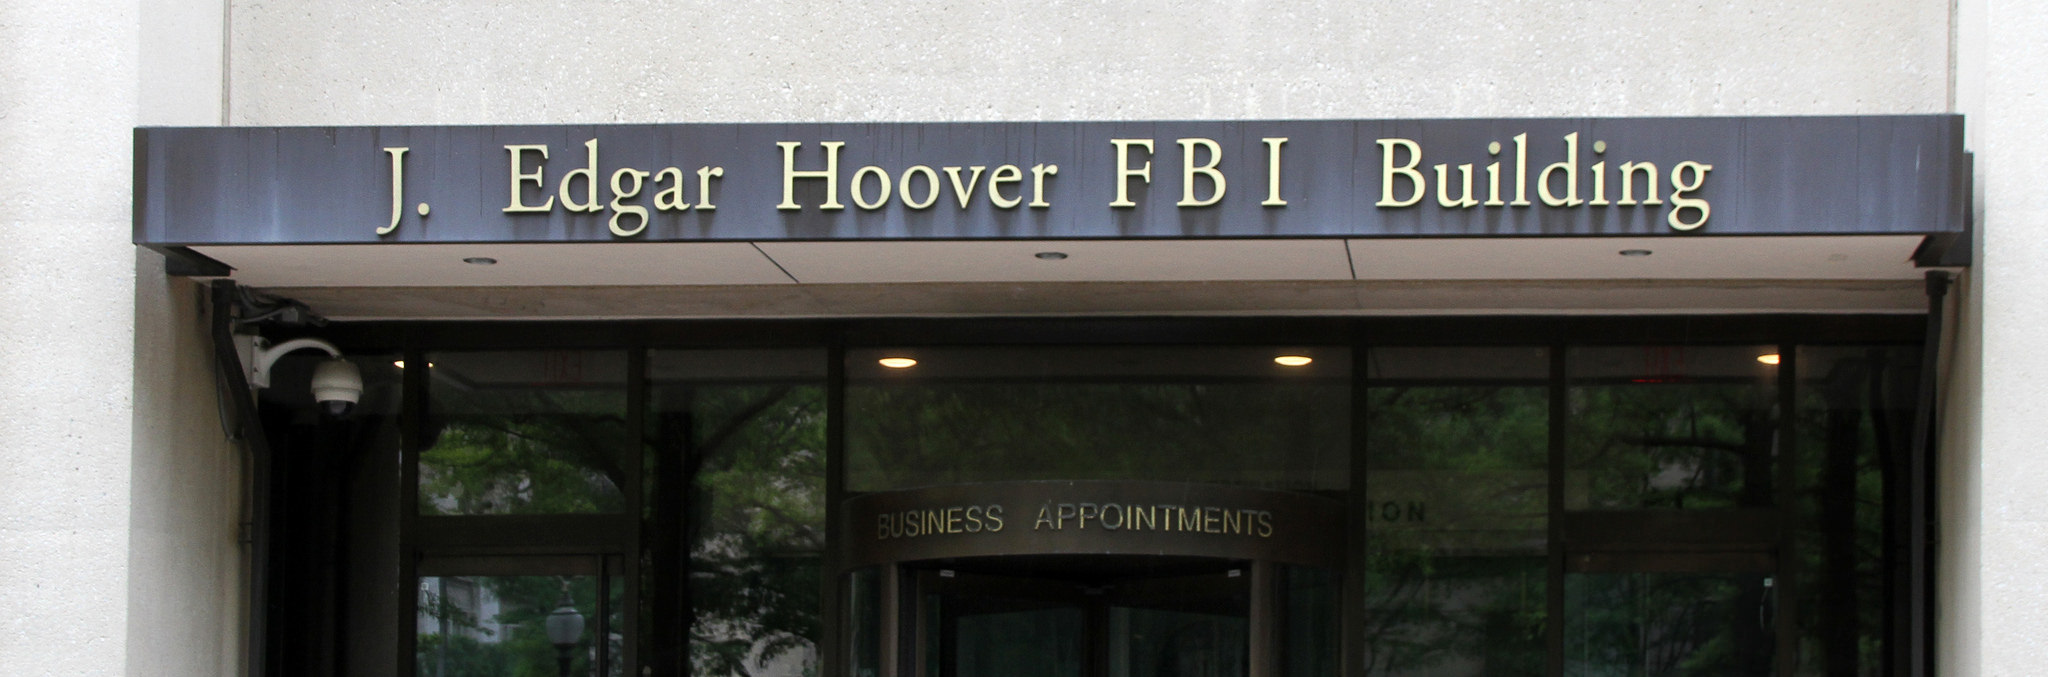 FBI Comey J. Edgar Hoover Building Federal Bureau of Investigation